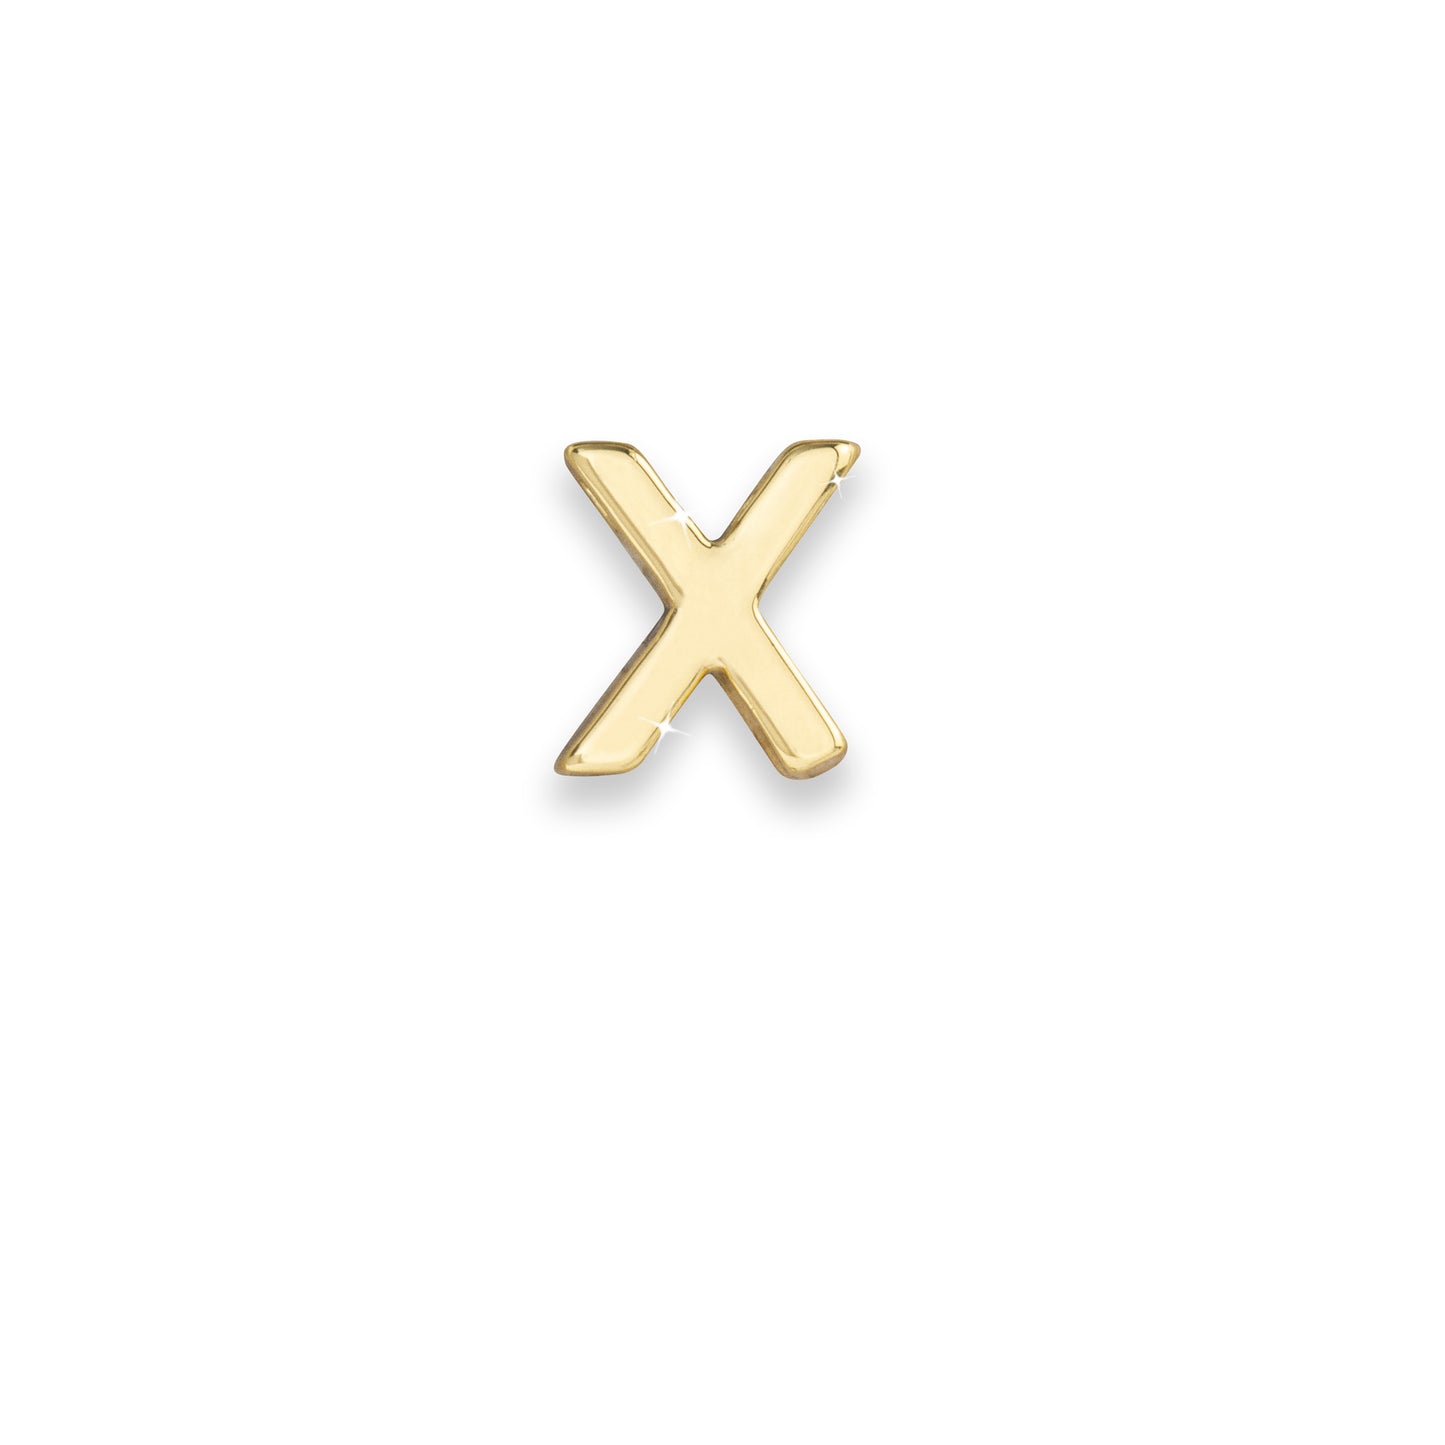 Gold letter X monogram charm for necklaces & bracelets